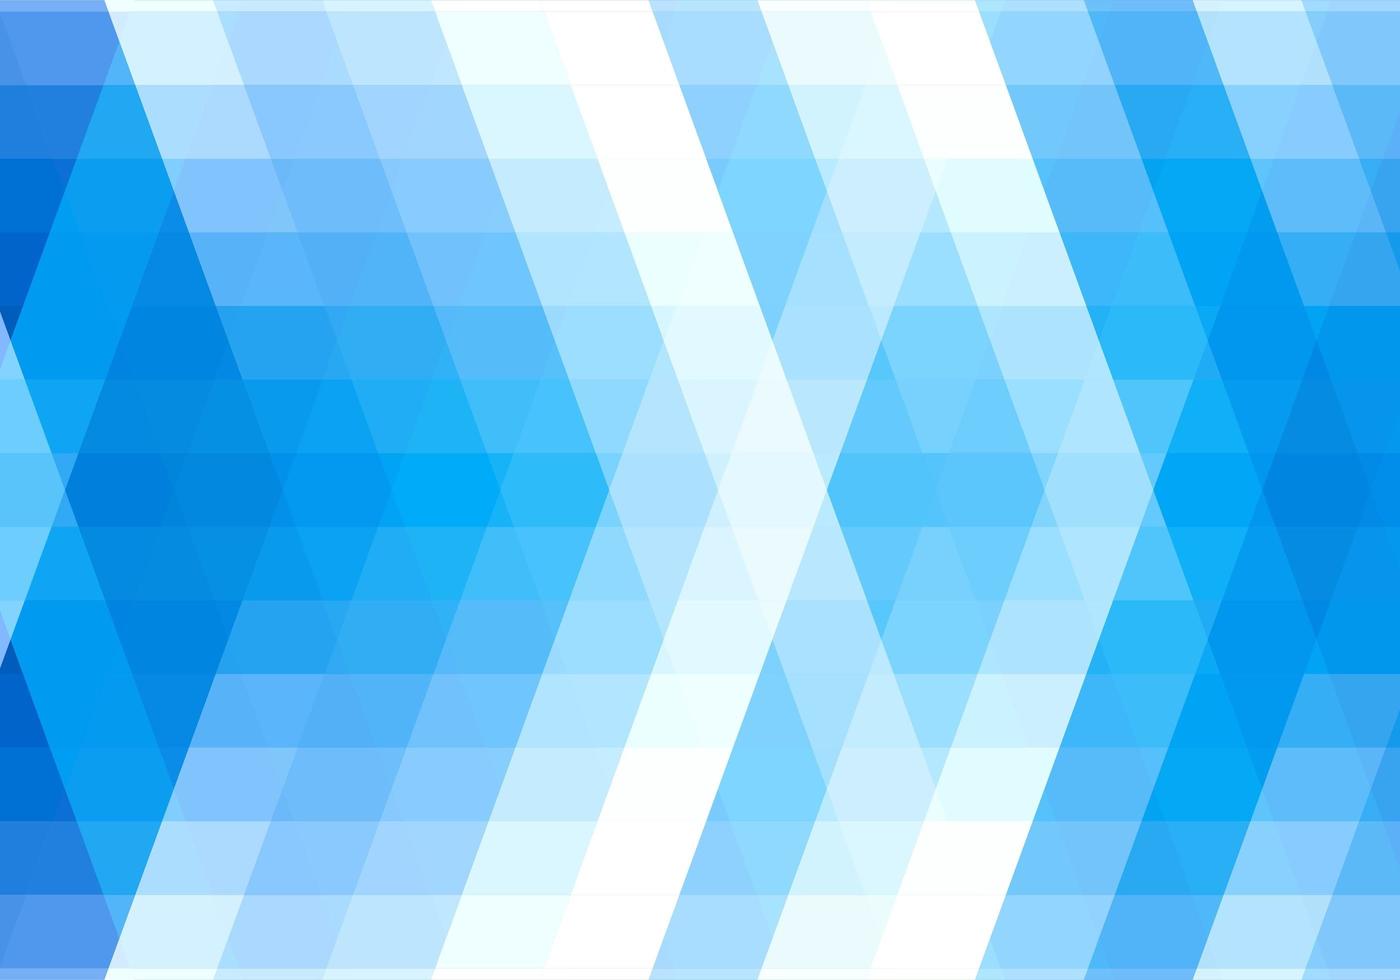 abstracte blauwe kriskras geometrische vormen achtergrond. vector